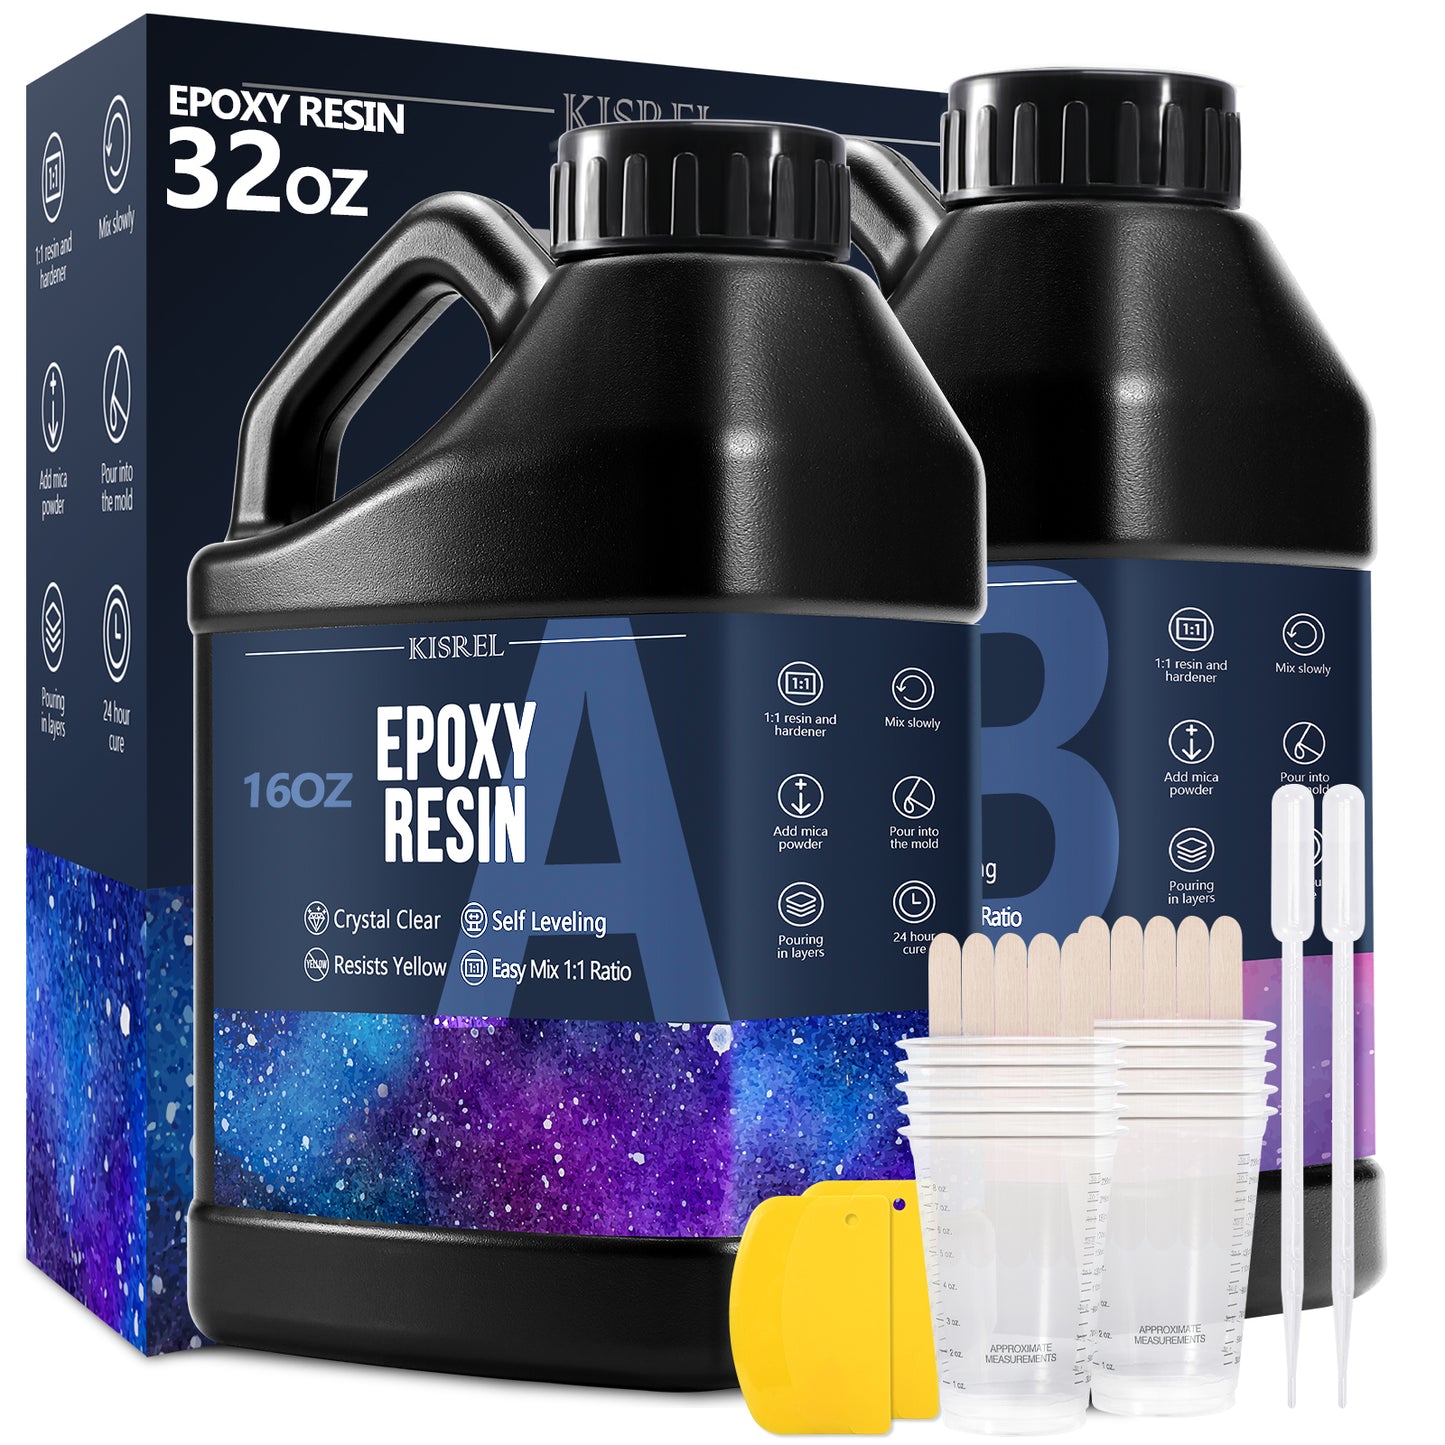 Epoxy Resin Kit - 16 oz